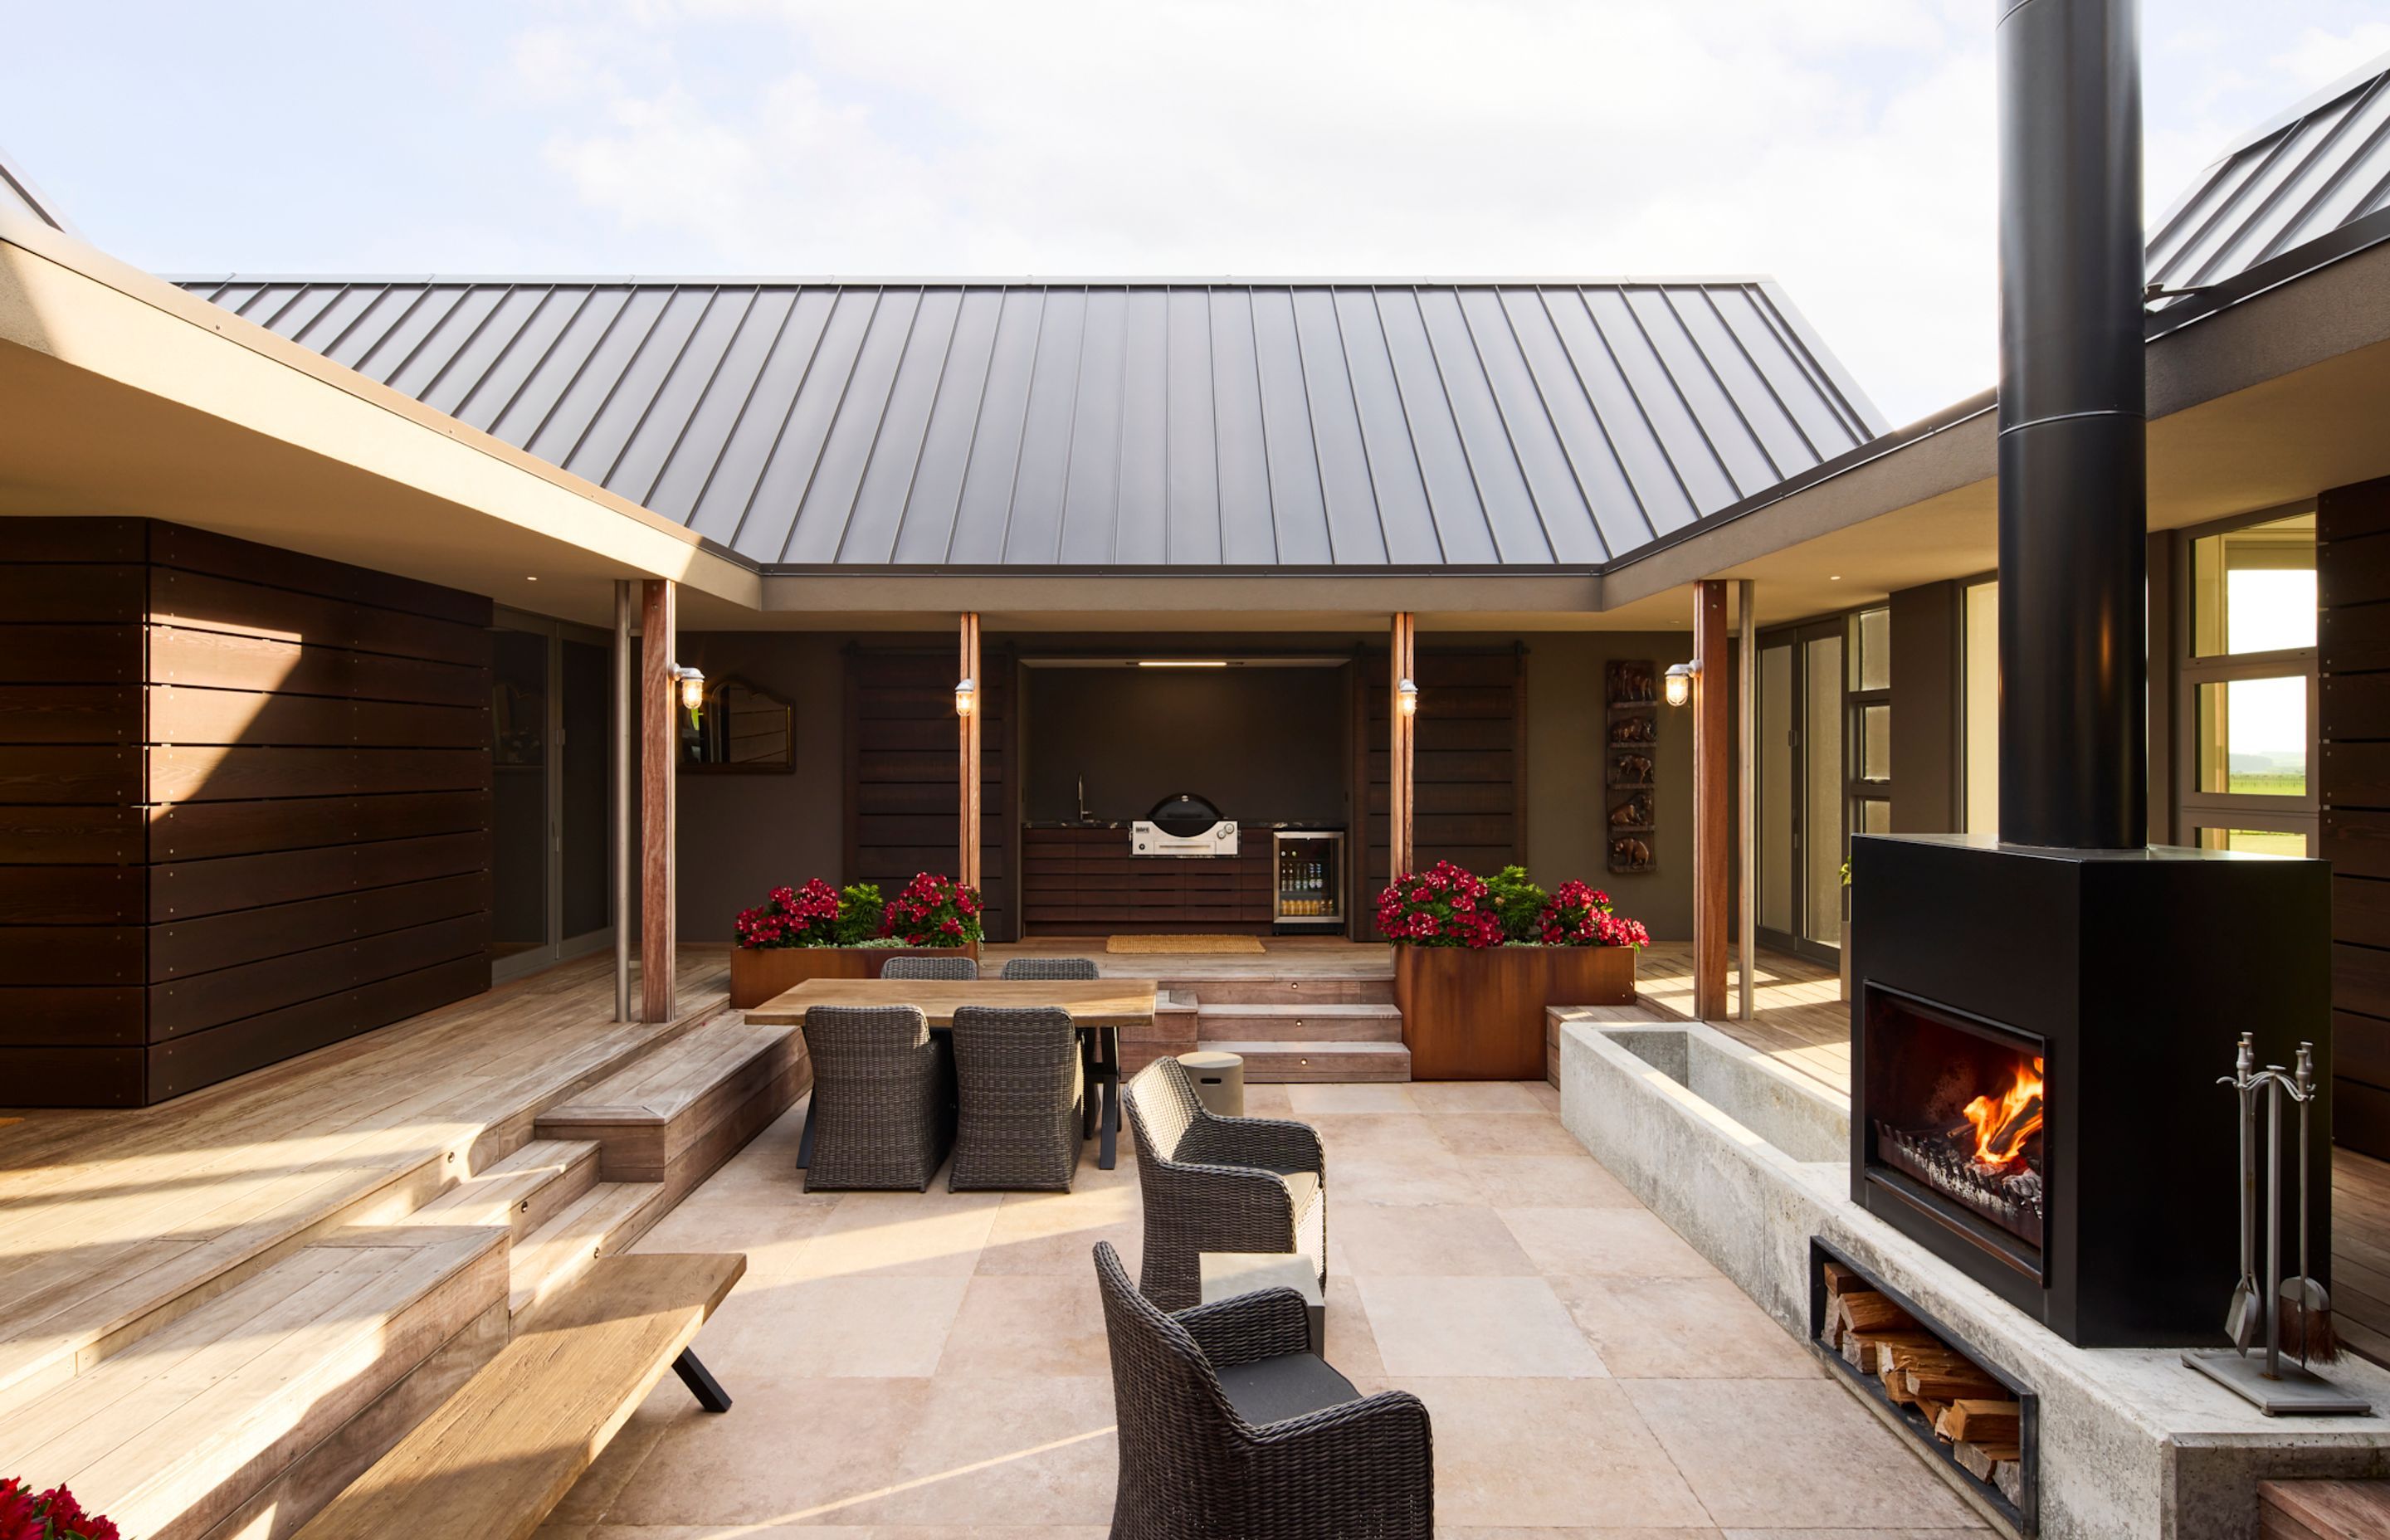 gibbons-architects-manawatu-courtyard-rural-home-exterior-01.jpg